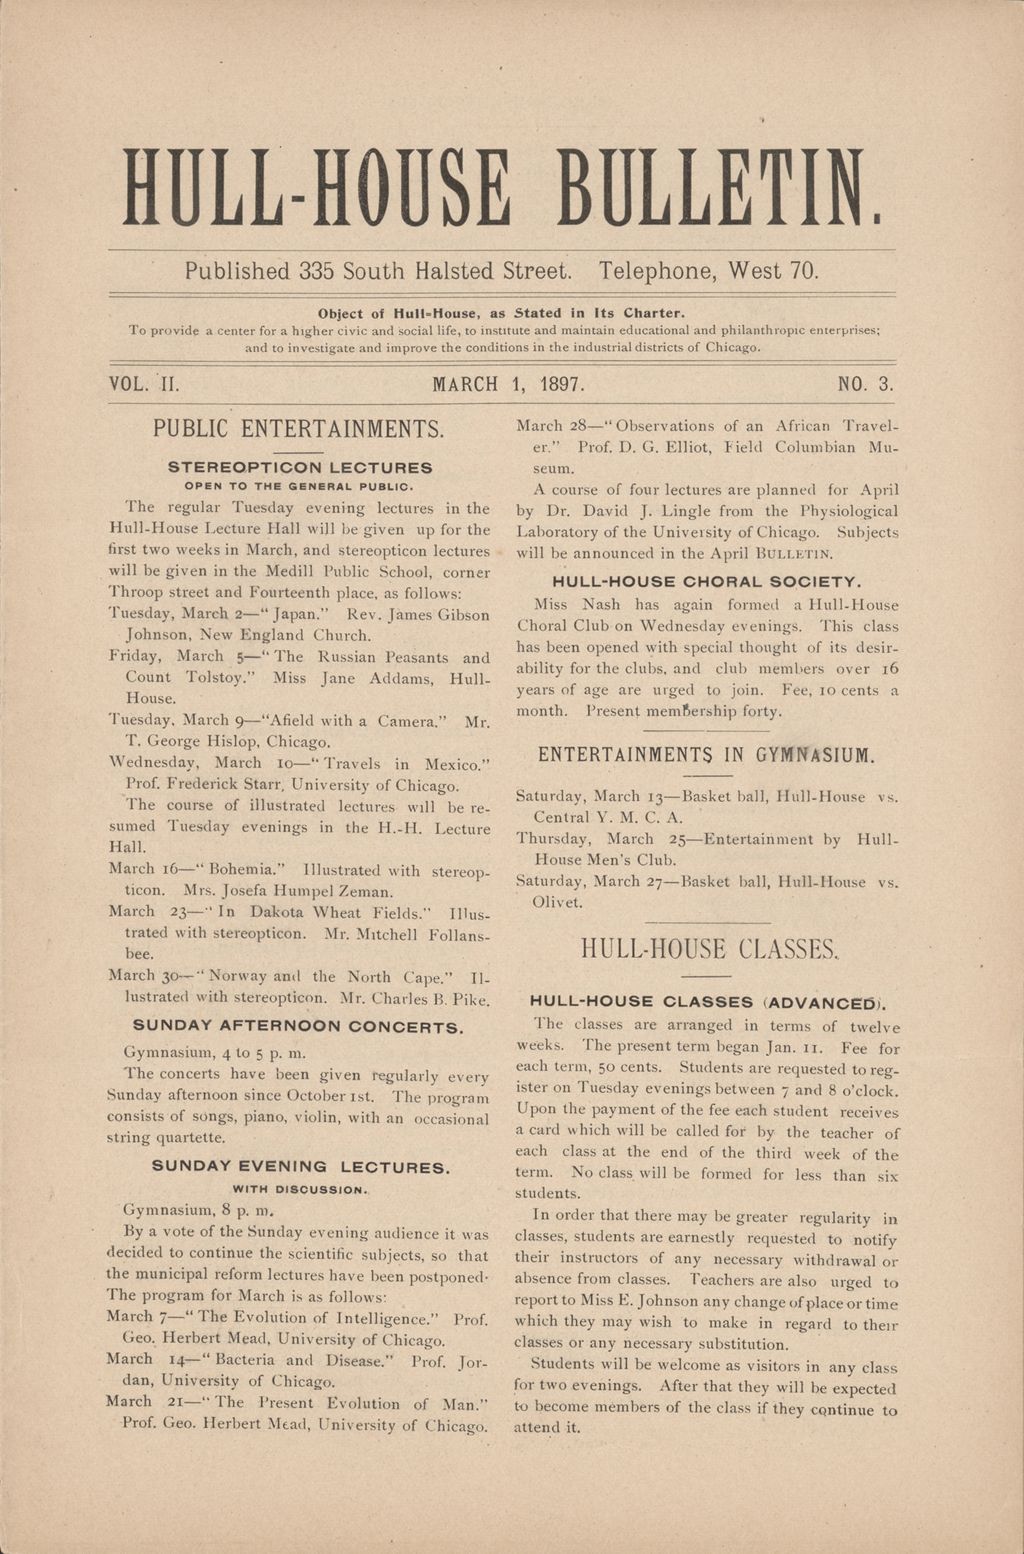 Hull-House Bulletin, vol. 2, no. 3, 1897: Mar. 1